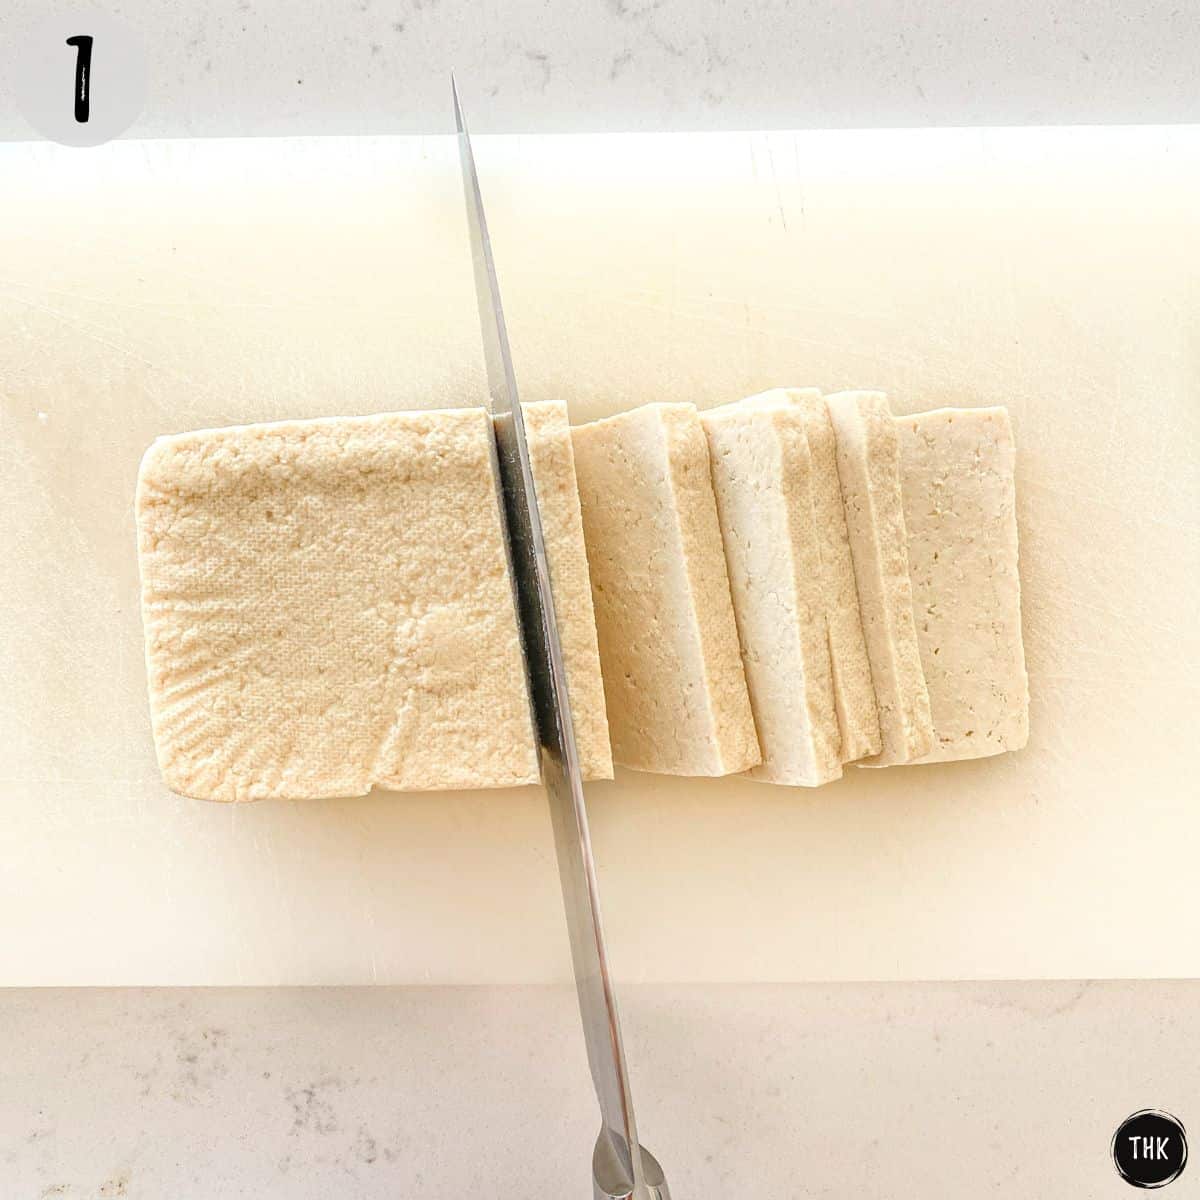 Tofu being sliced on cutting board.